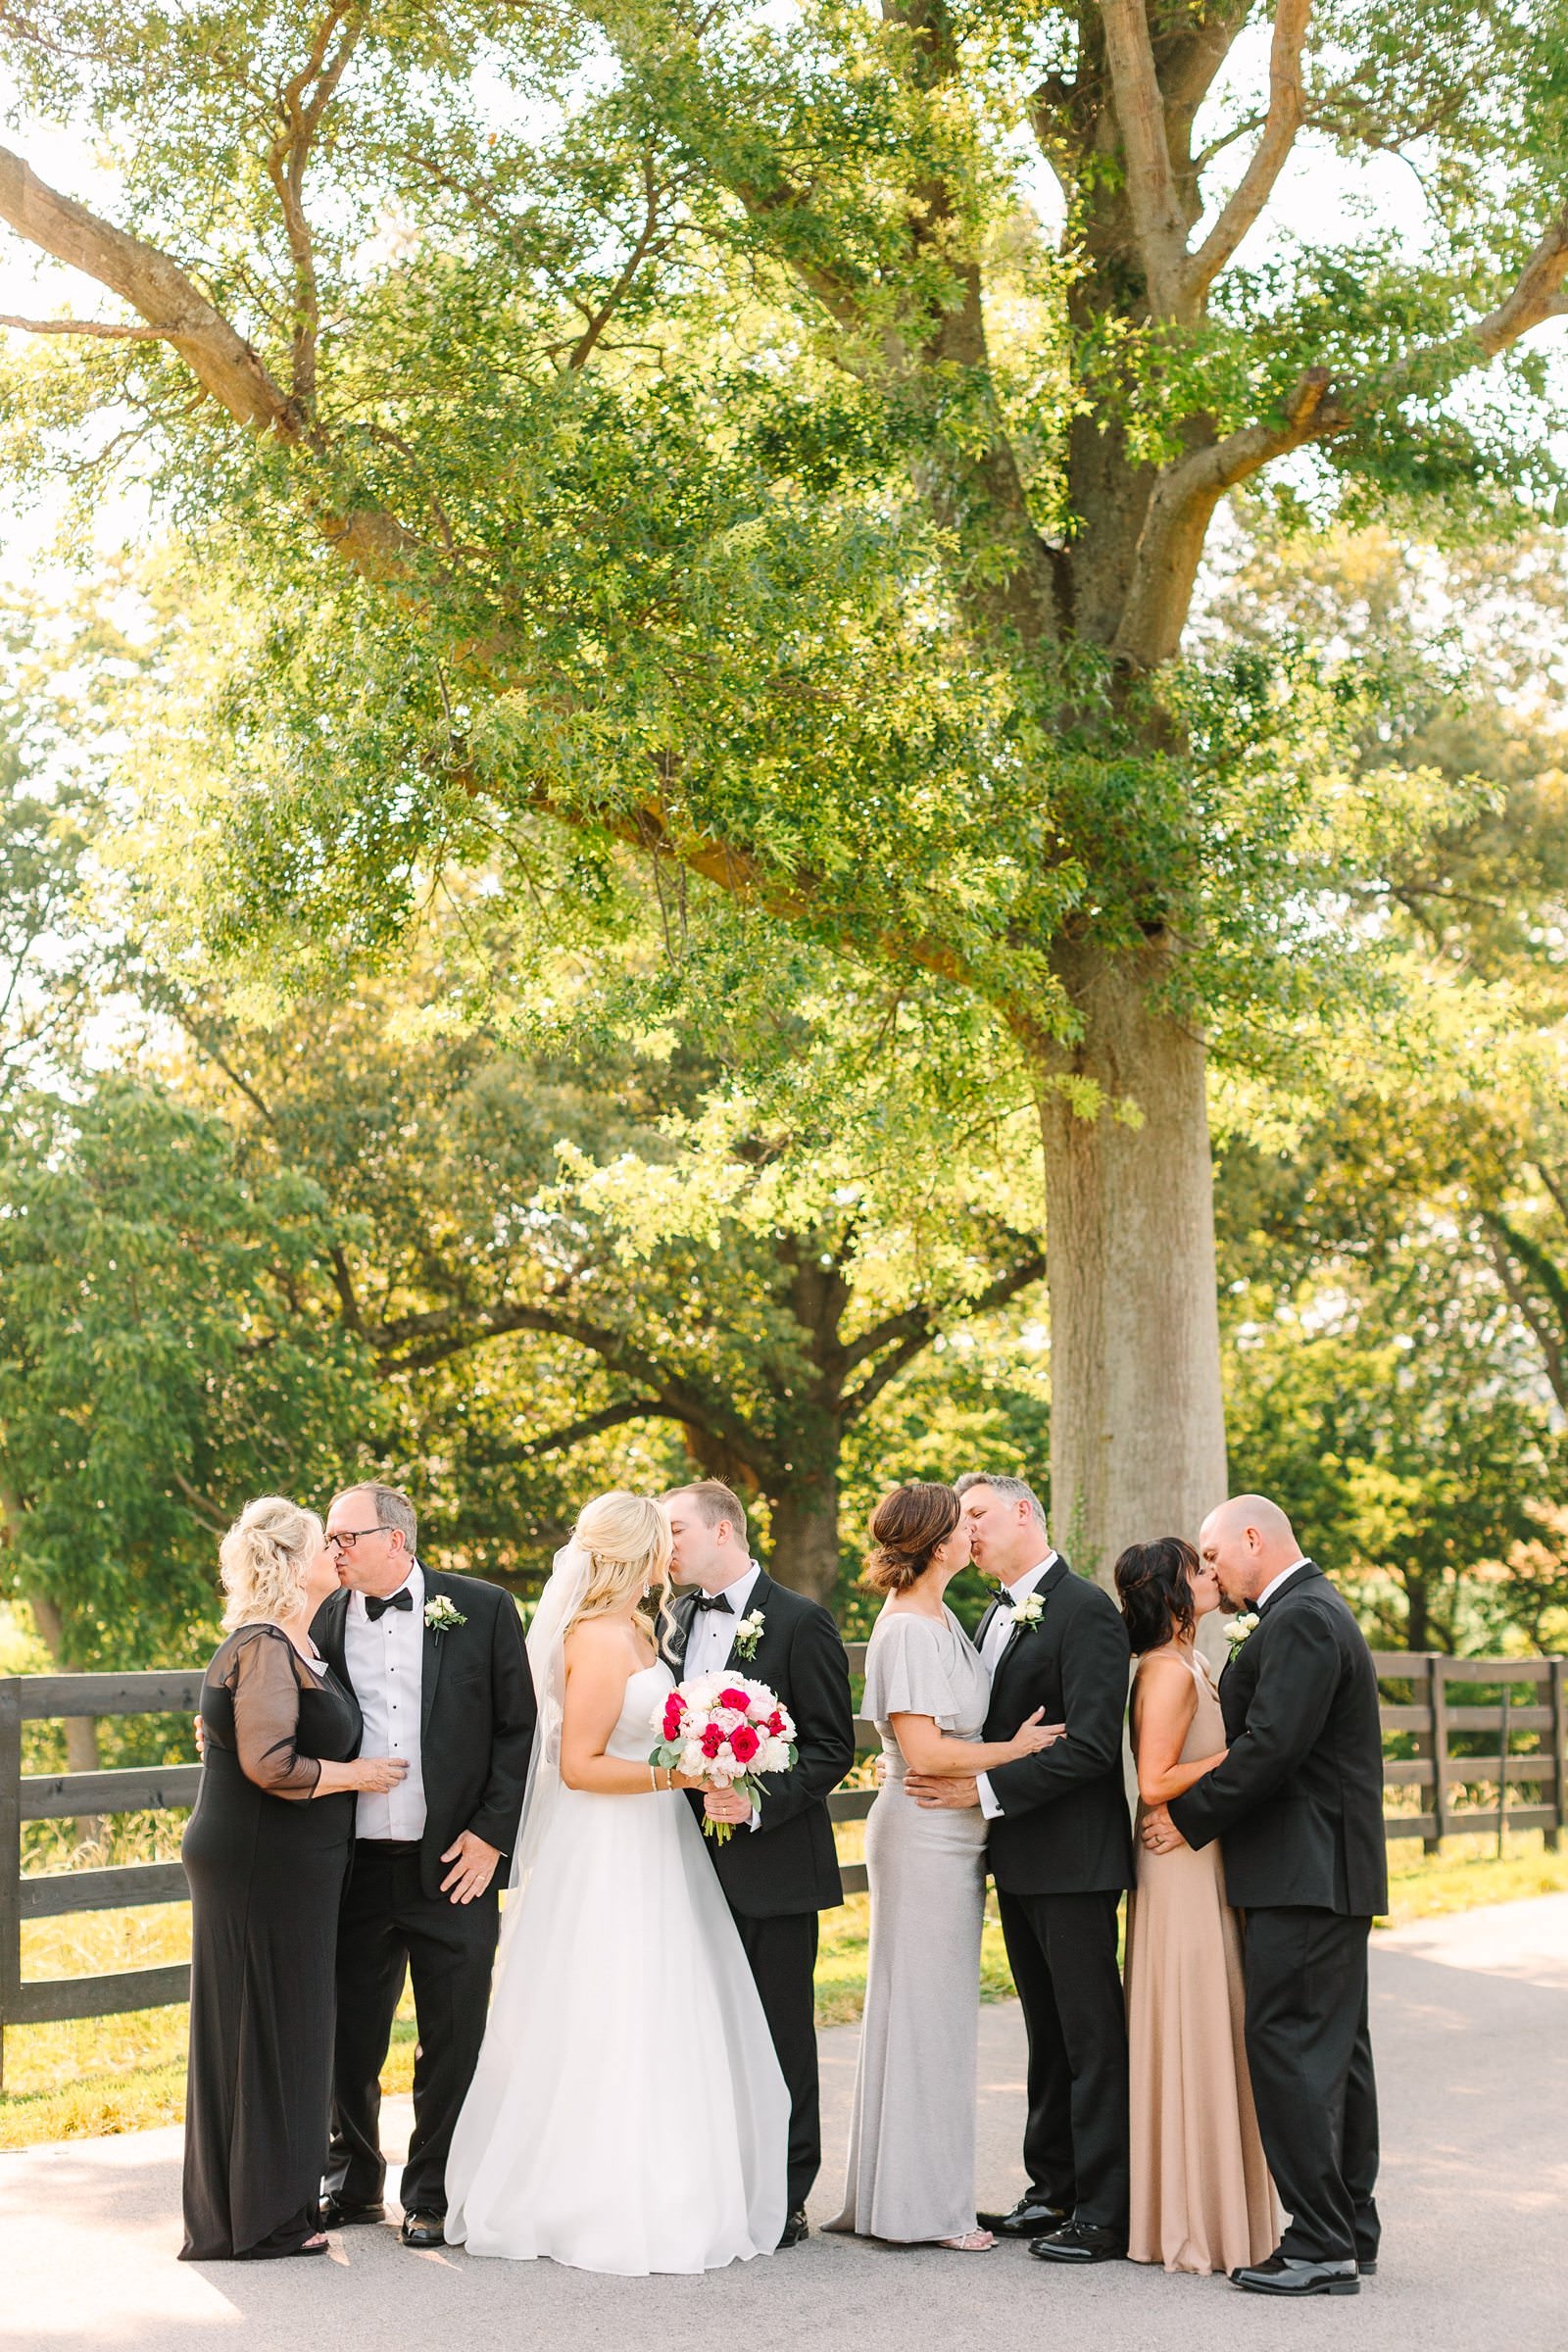 A Downtown Owensboro Wedding at River Park Center | Kaitlin & Justin108.jpg